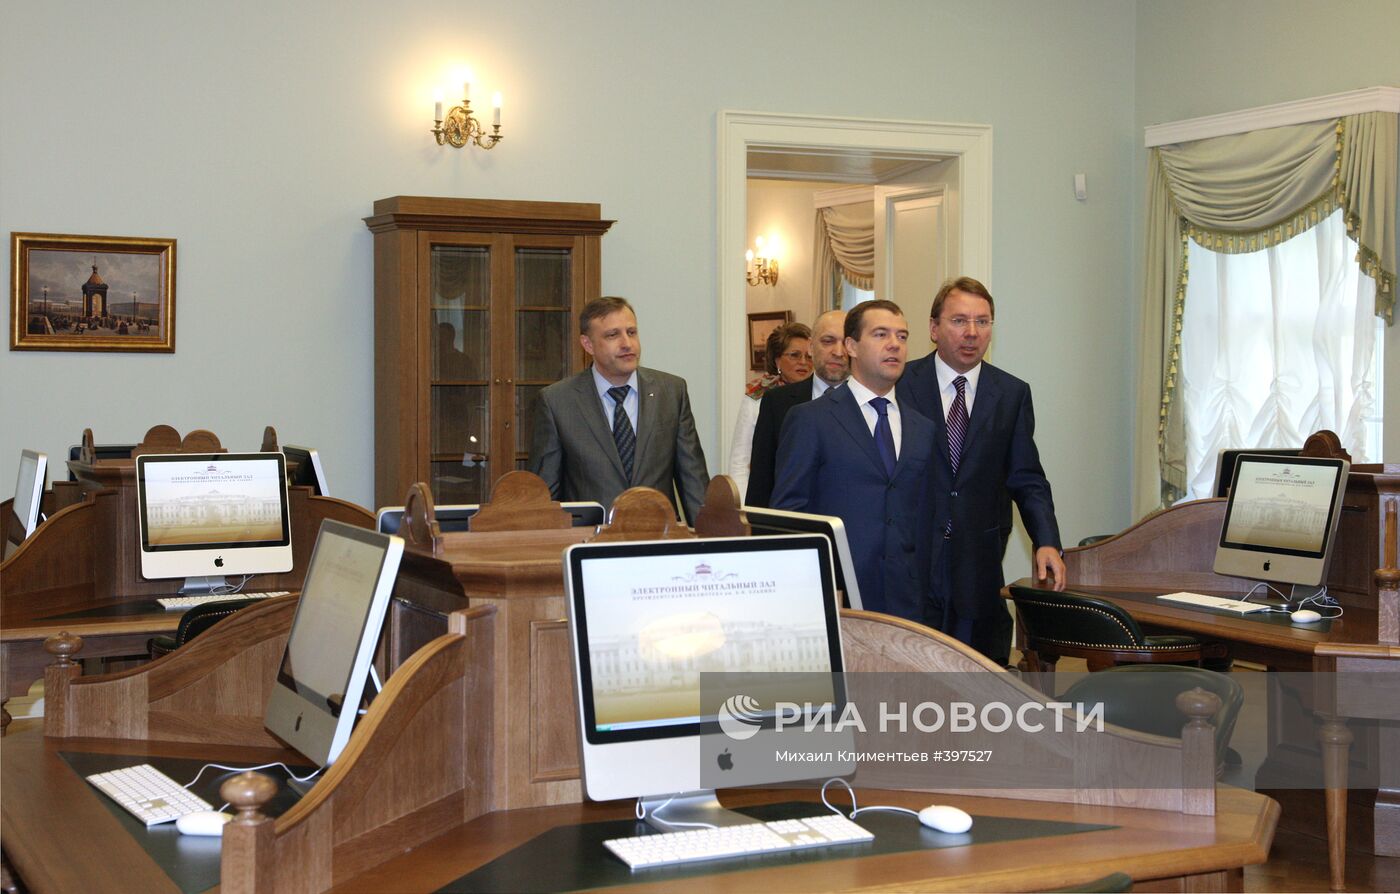 Президент РФ посетил Президентскую библиотеку имени Б. Ельцина